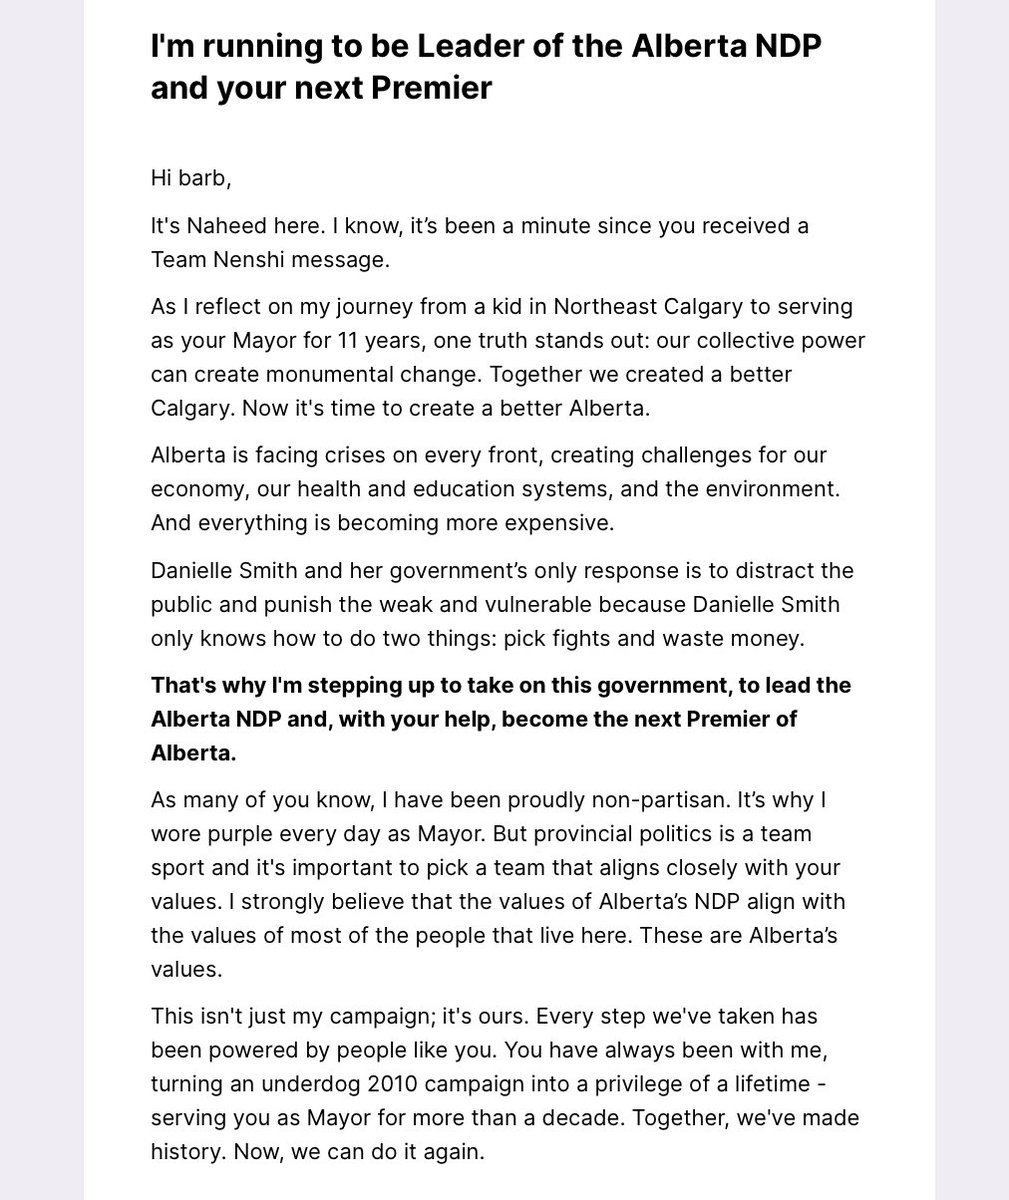 Alberta let's get started. We can do this 😊
#alberta #ndp 
#abpoli #cdnpoli #cdnmedia #AlbertaNDP #Nenshi #NenshiForAlberta 

 🔥❤️ 👇🥹
'Here's why I’m running to be the Leader of Alberta’s NDP and the next Premier of Alberta.'
nenshi.ca/?utm_source=ne…+

nenshi.ca/?utm_source=ne…+